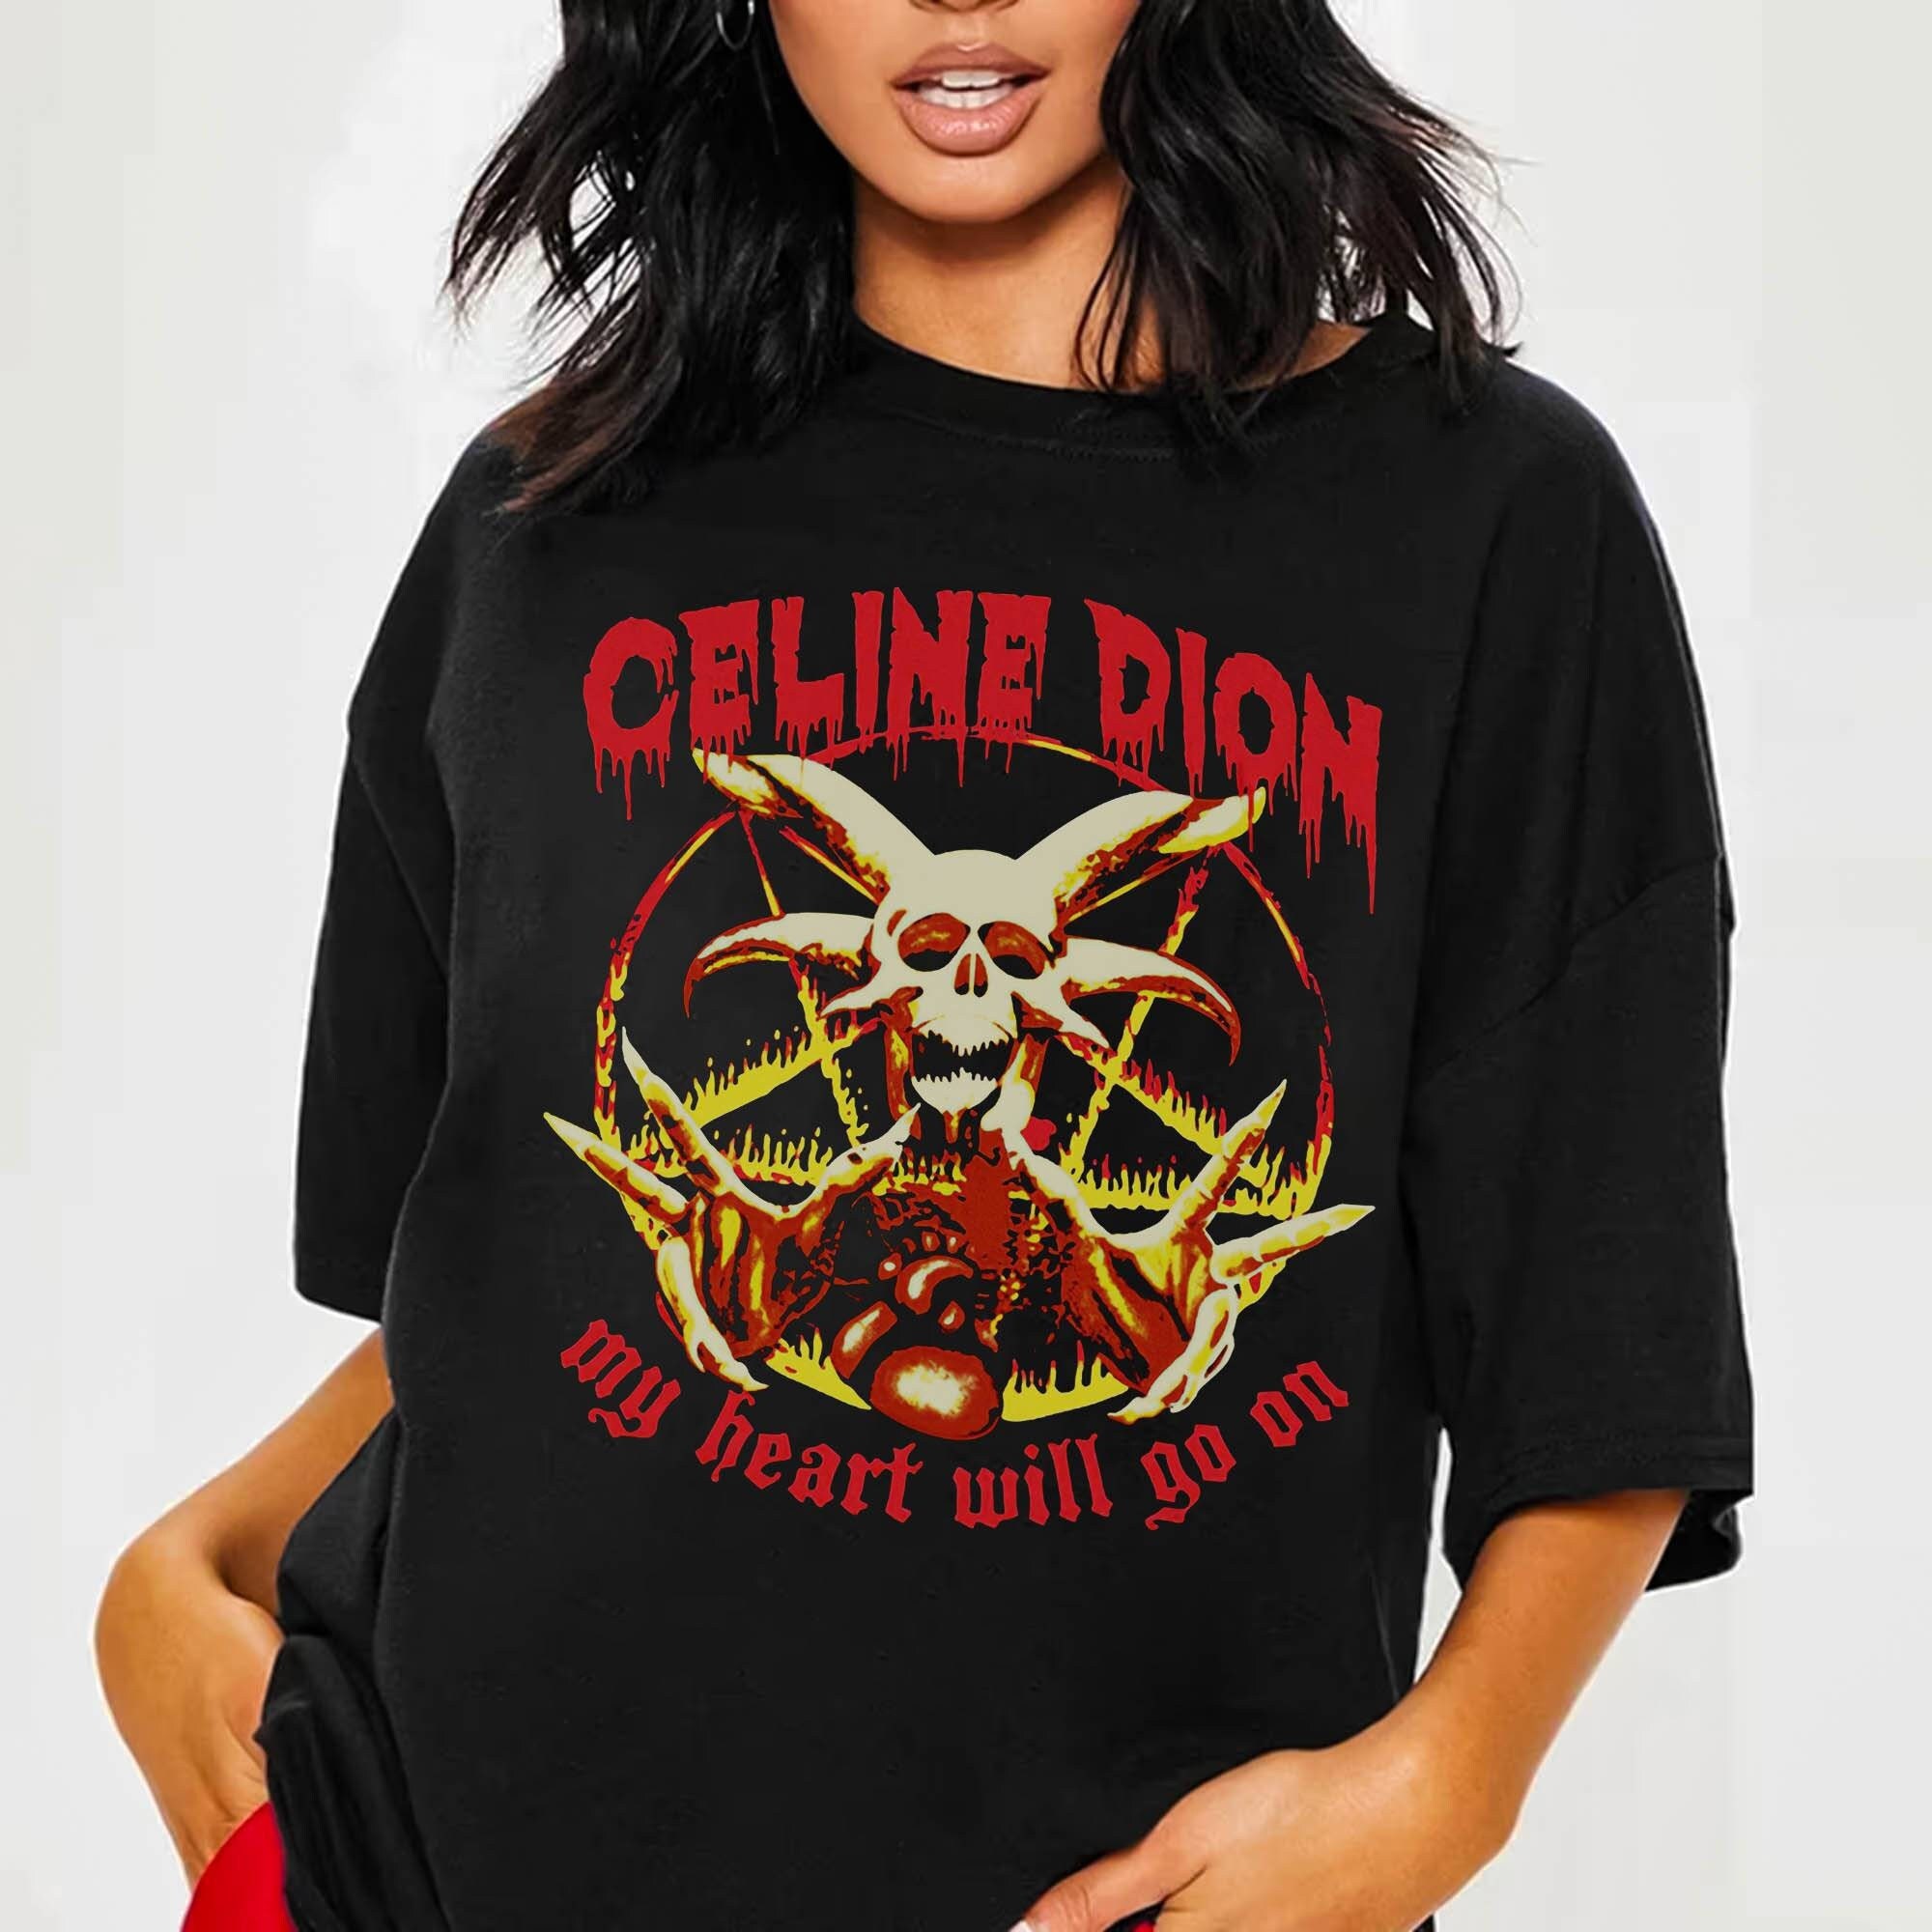 Celine Graphic Print Crew Neck T-Shirt - Blue T-Shirts, Clothing -  CEL260161